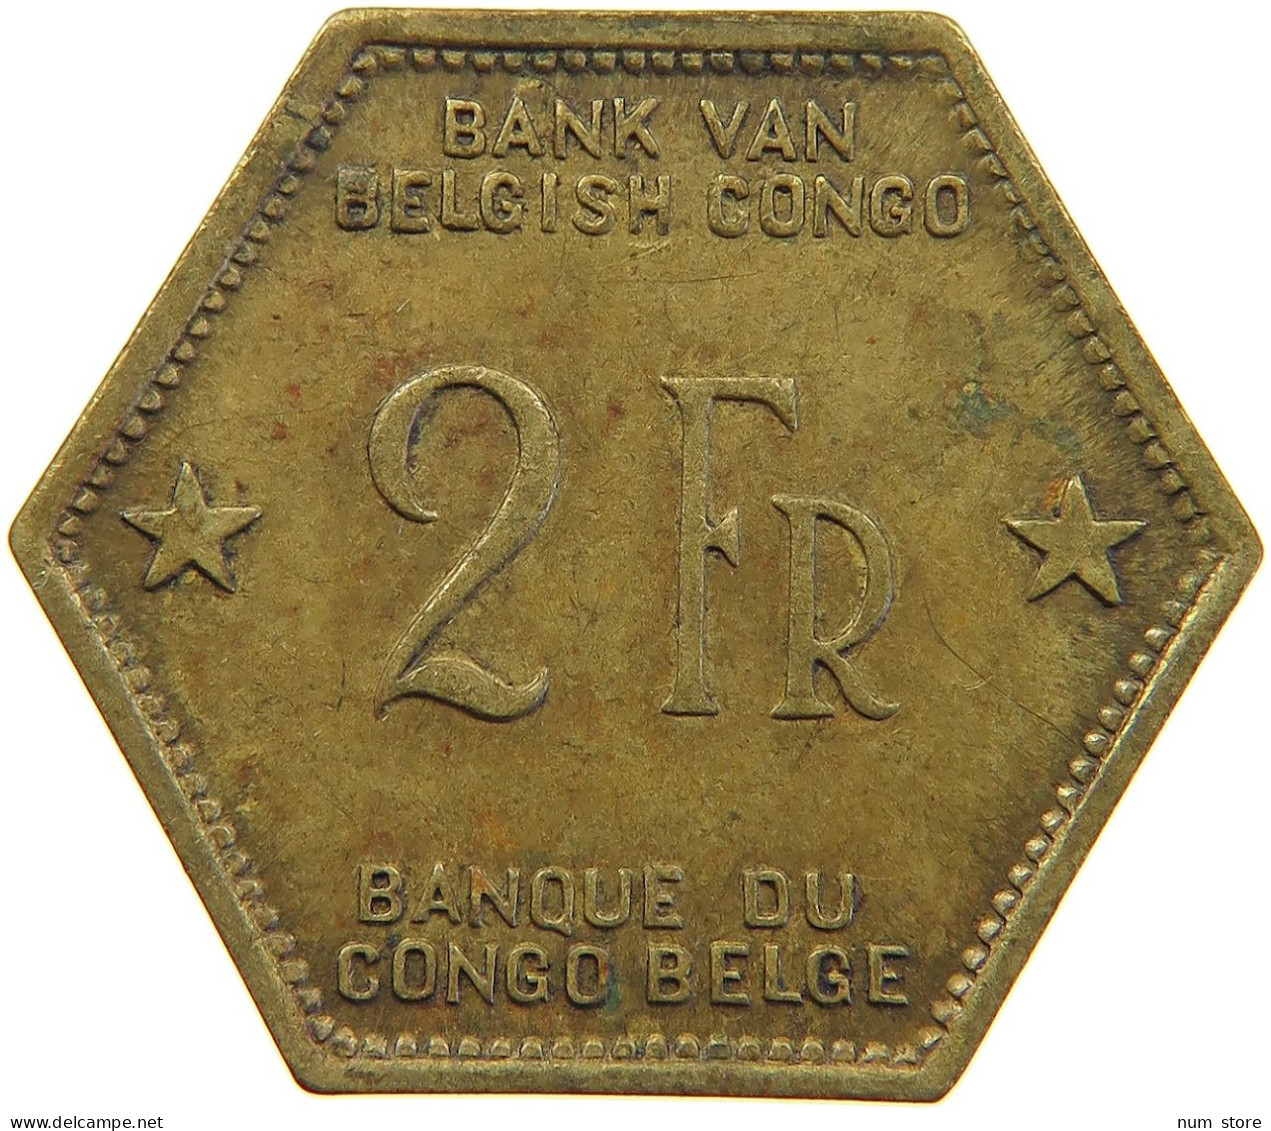 BELGIAN CONGO 2 FRANCS 1943  #t159 0273 - 1934-1945: Leopold III